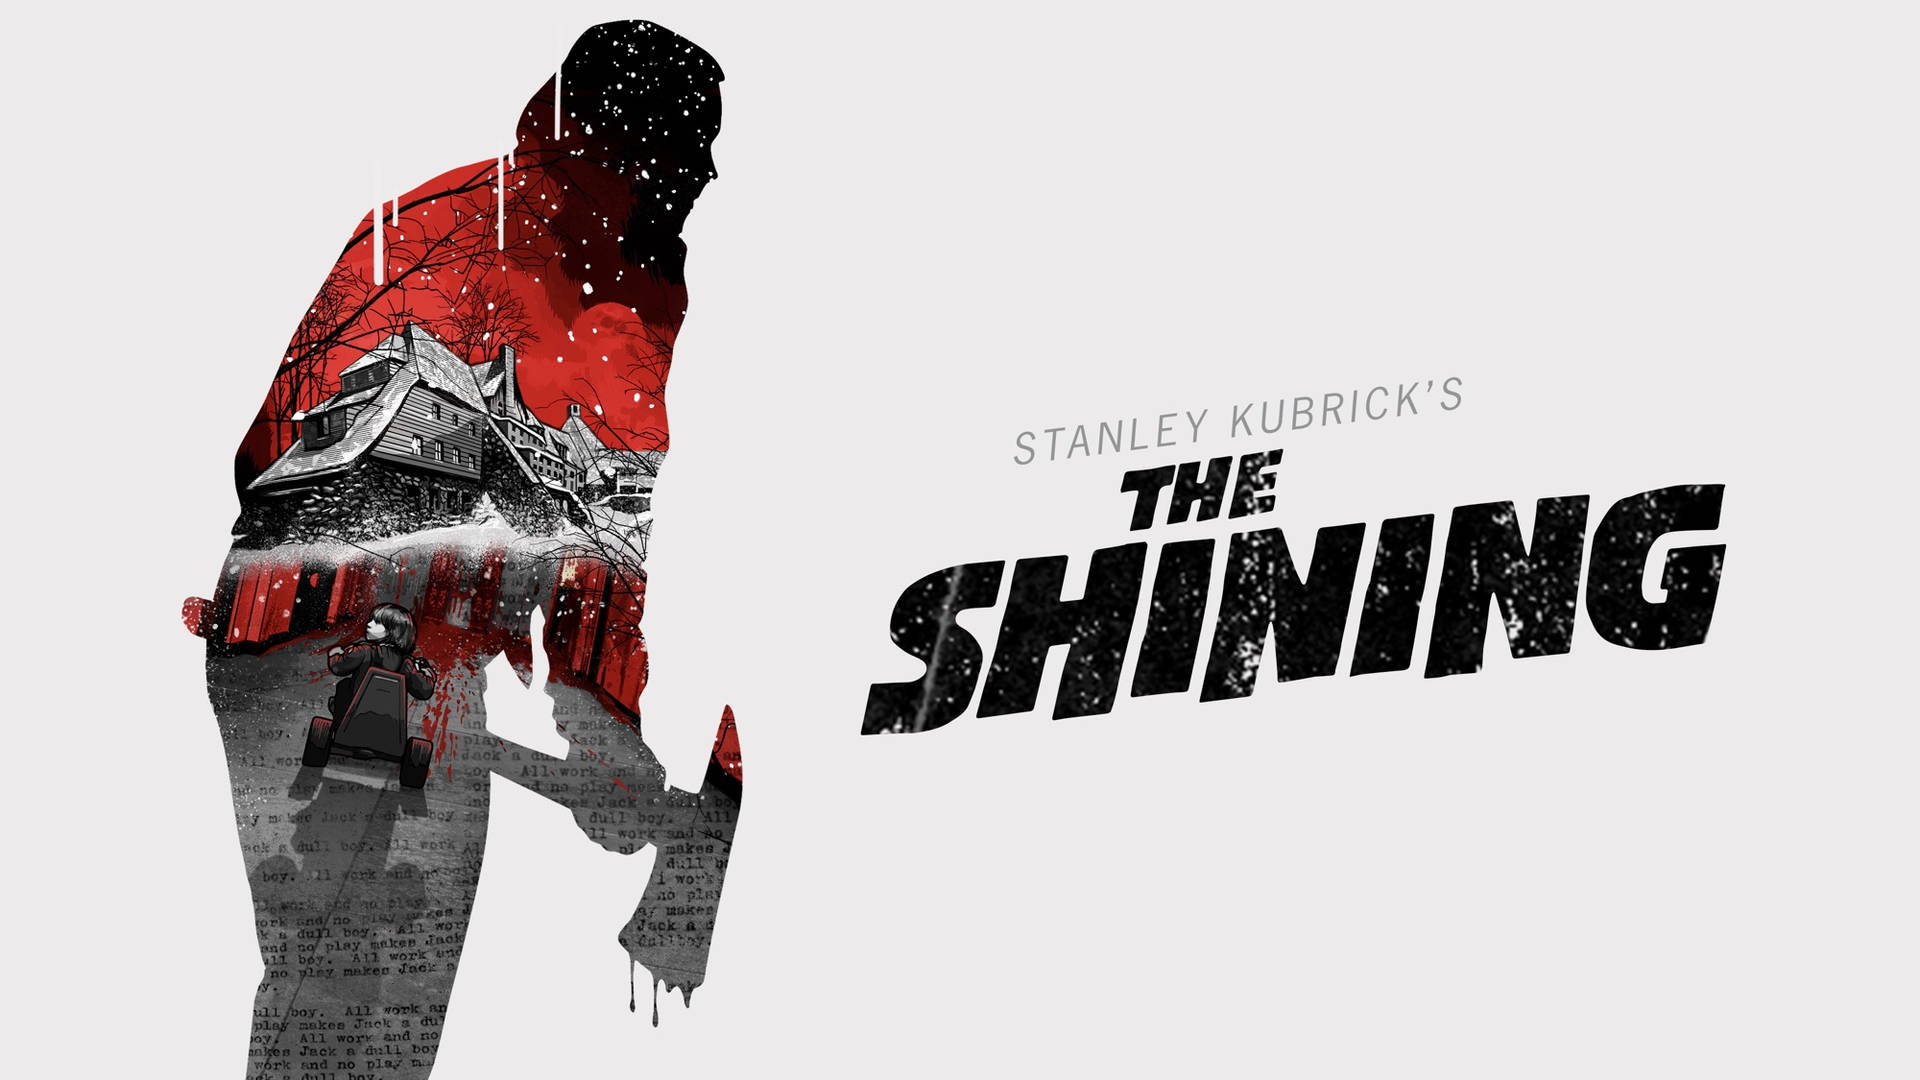 The Shining Jack Poster Background